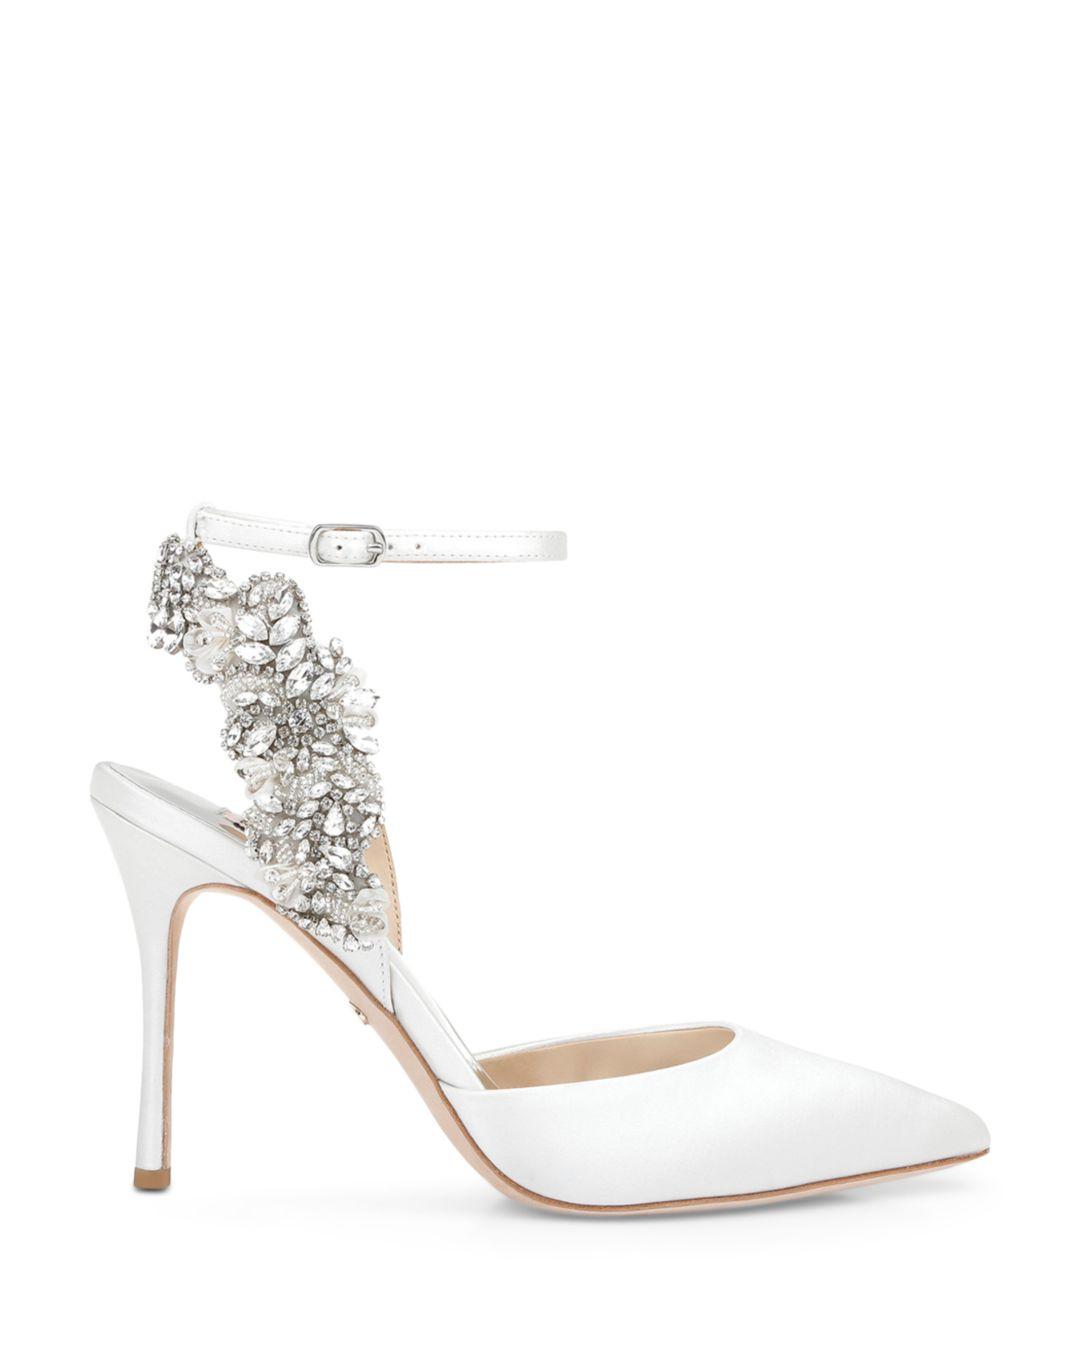 Badgley Mischka Blanca Ankle Strap Embellished Pumps in White | Lyst